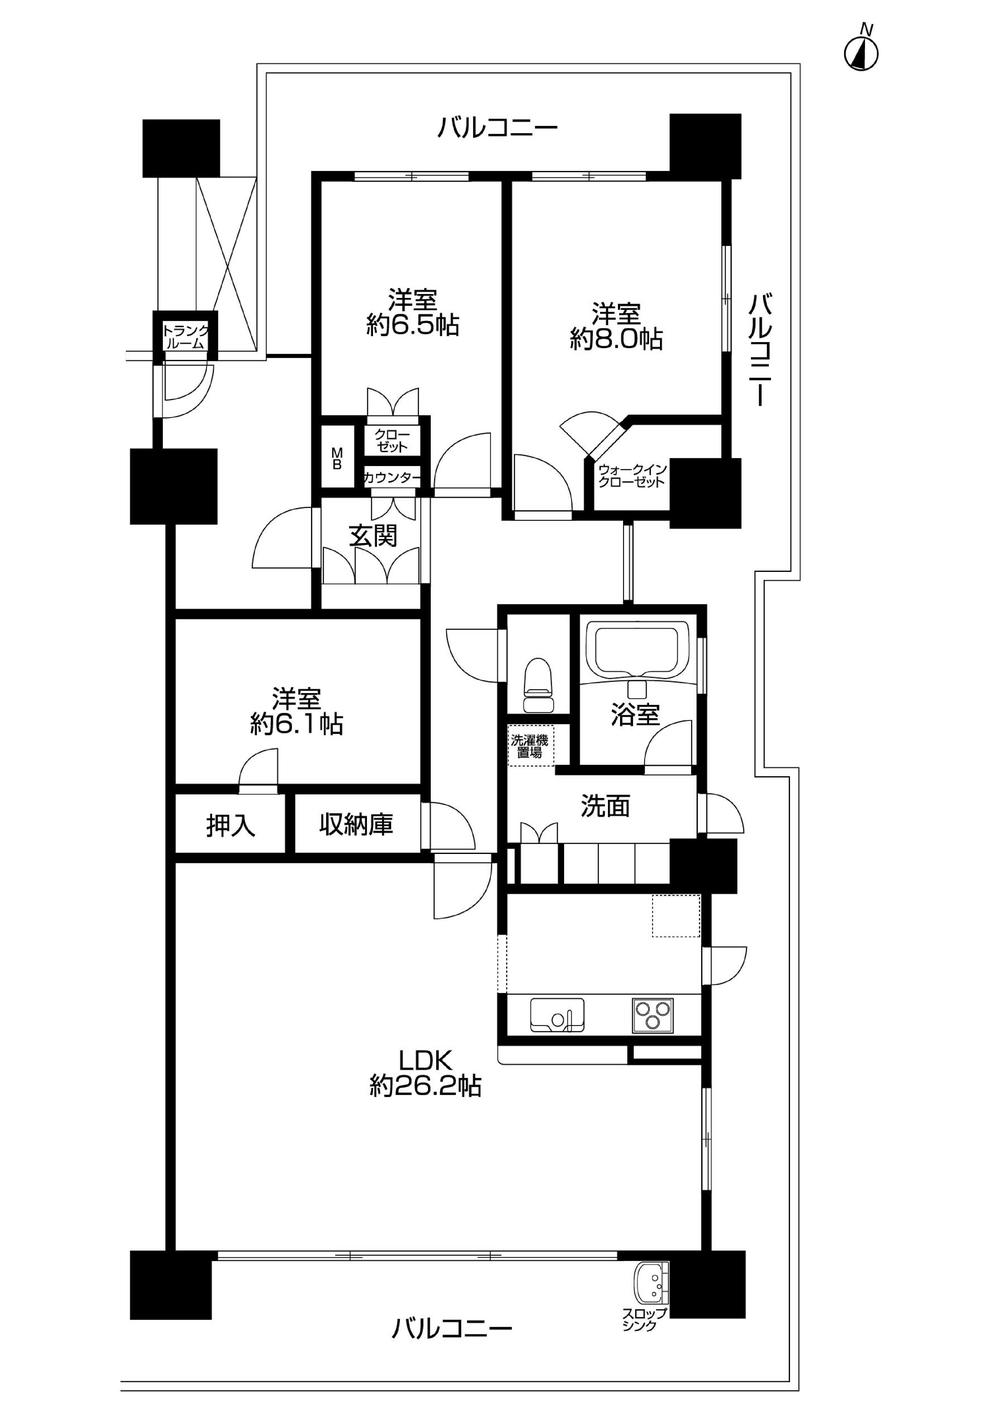 Floor plan. 3LDK, Price 35,800,000 yen, Footprint 105.54 sq m , Balcony area 53.93 sq m